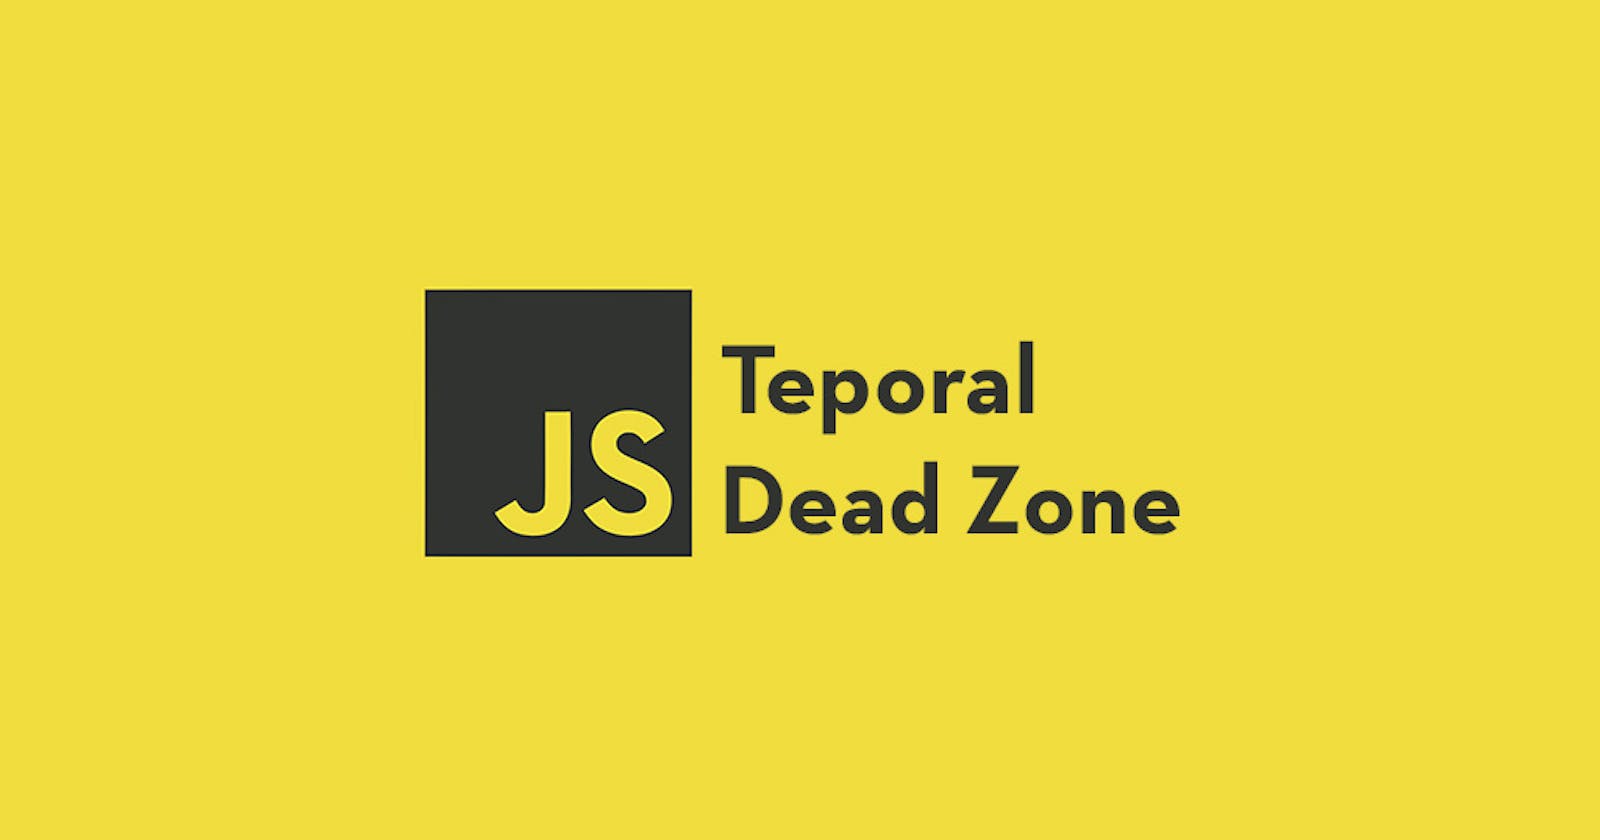 Temporal deadzone in Javascript